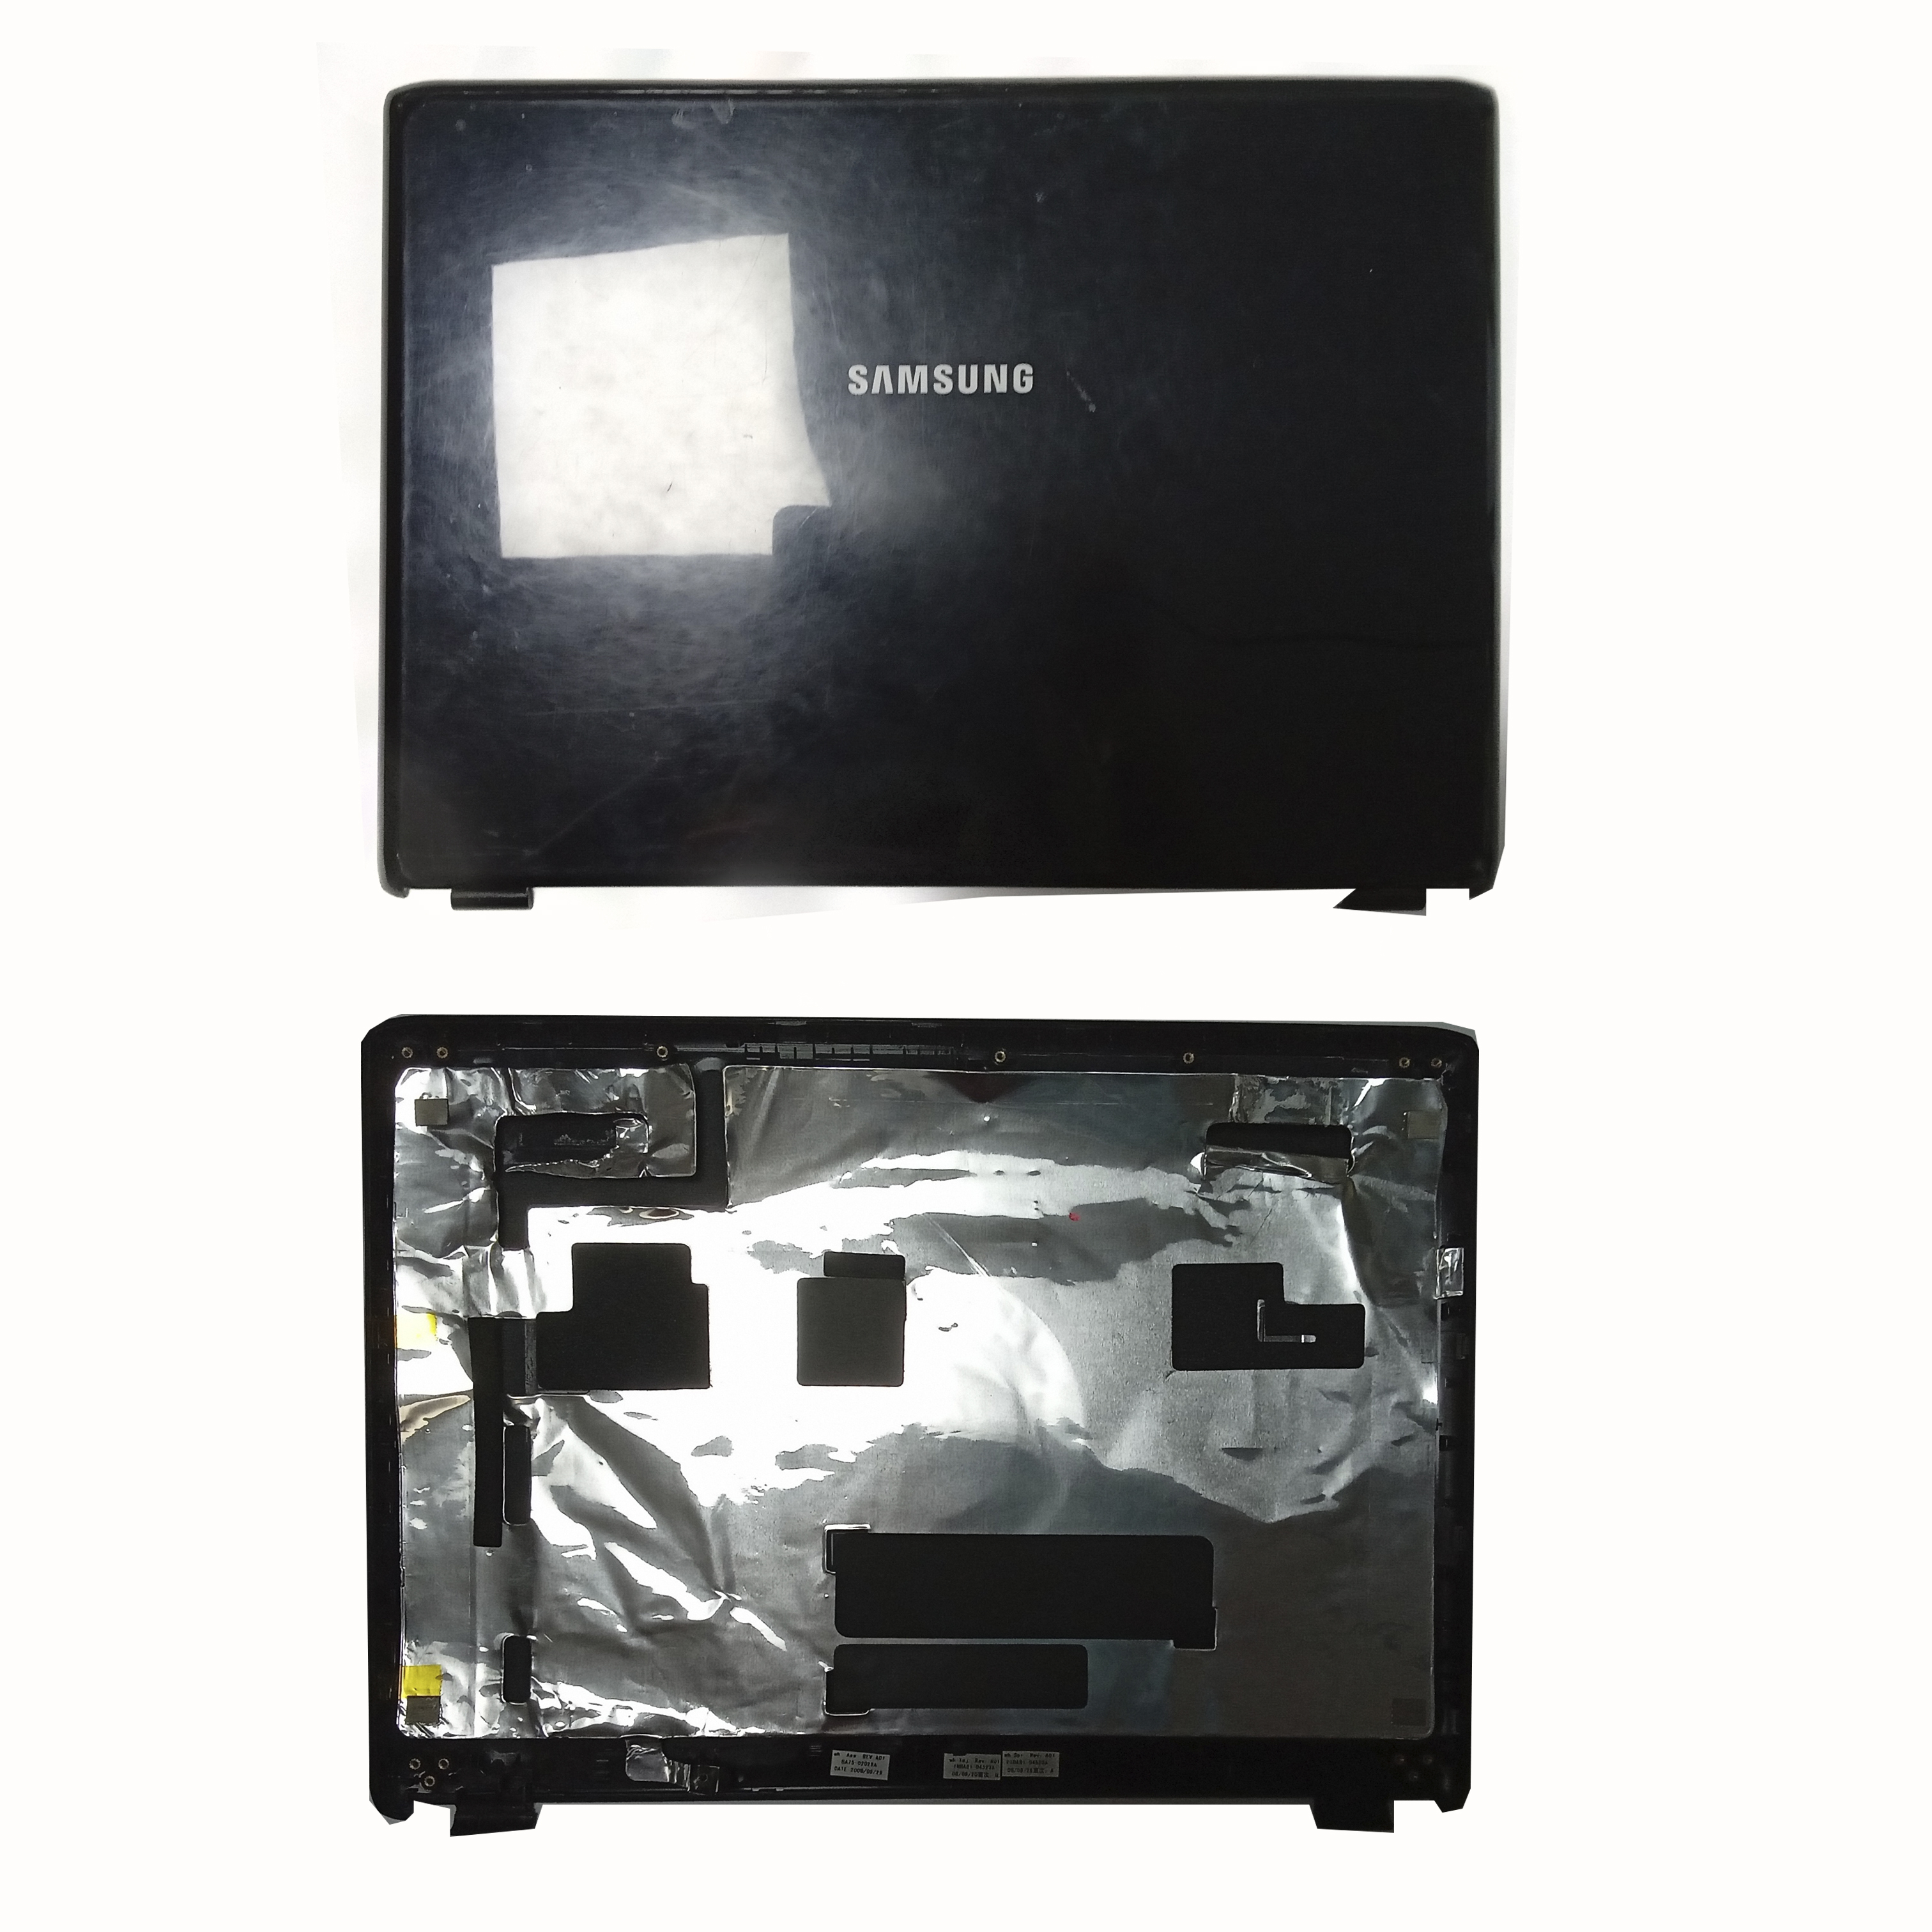 Деталь A корпуса ноутбука Samsung R410/R460 бу